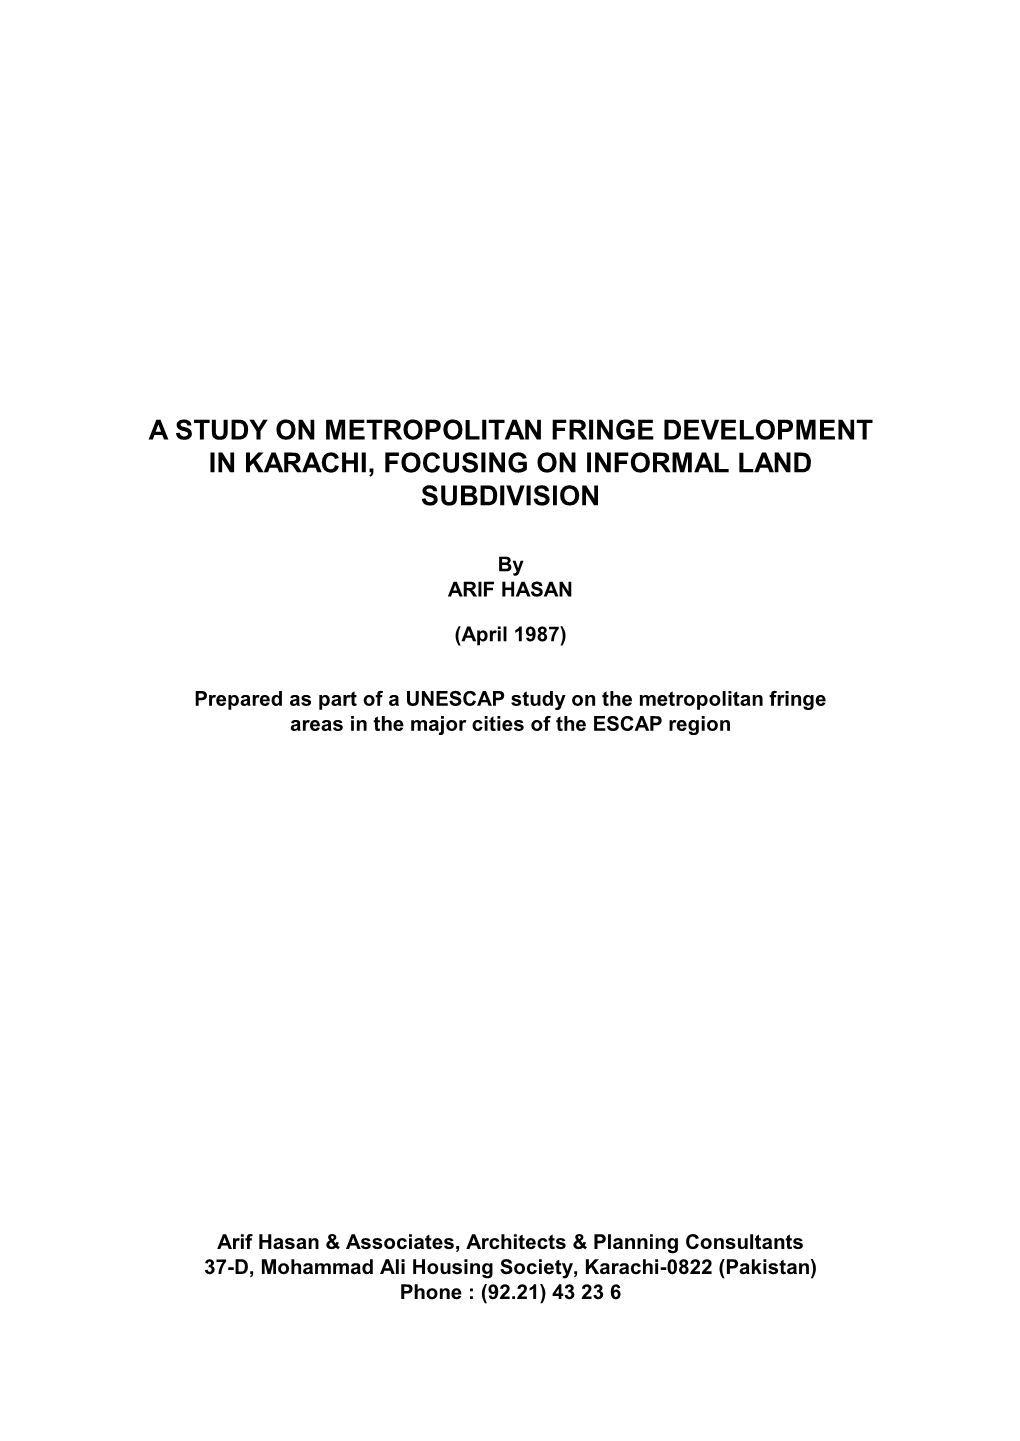 A Study on Metropolitan Fringe Development in Karachi, Focusing on Informal Land Subdivision